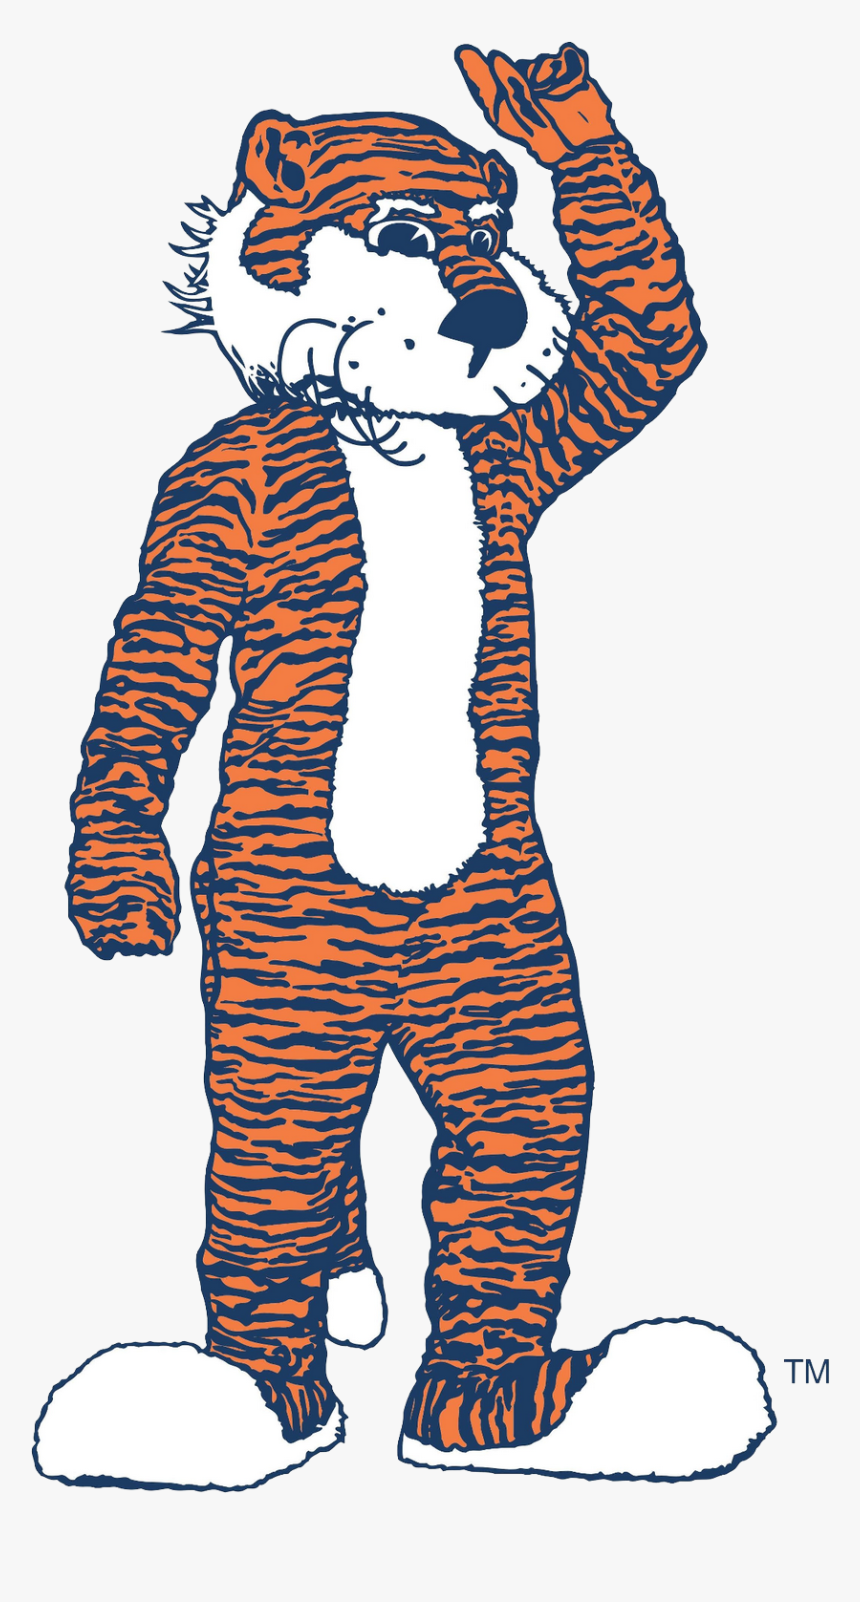 View of cartoon tiger - team mascot, #851518